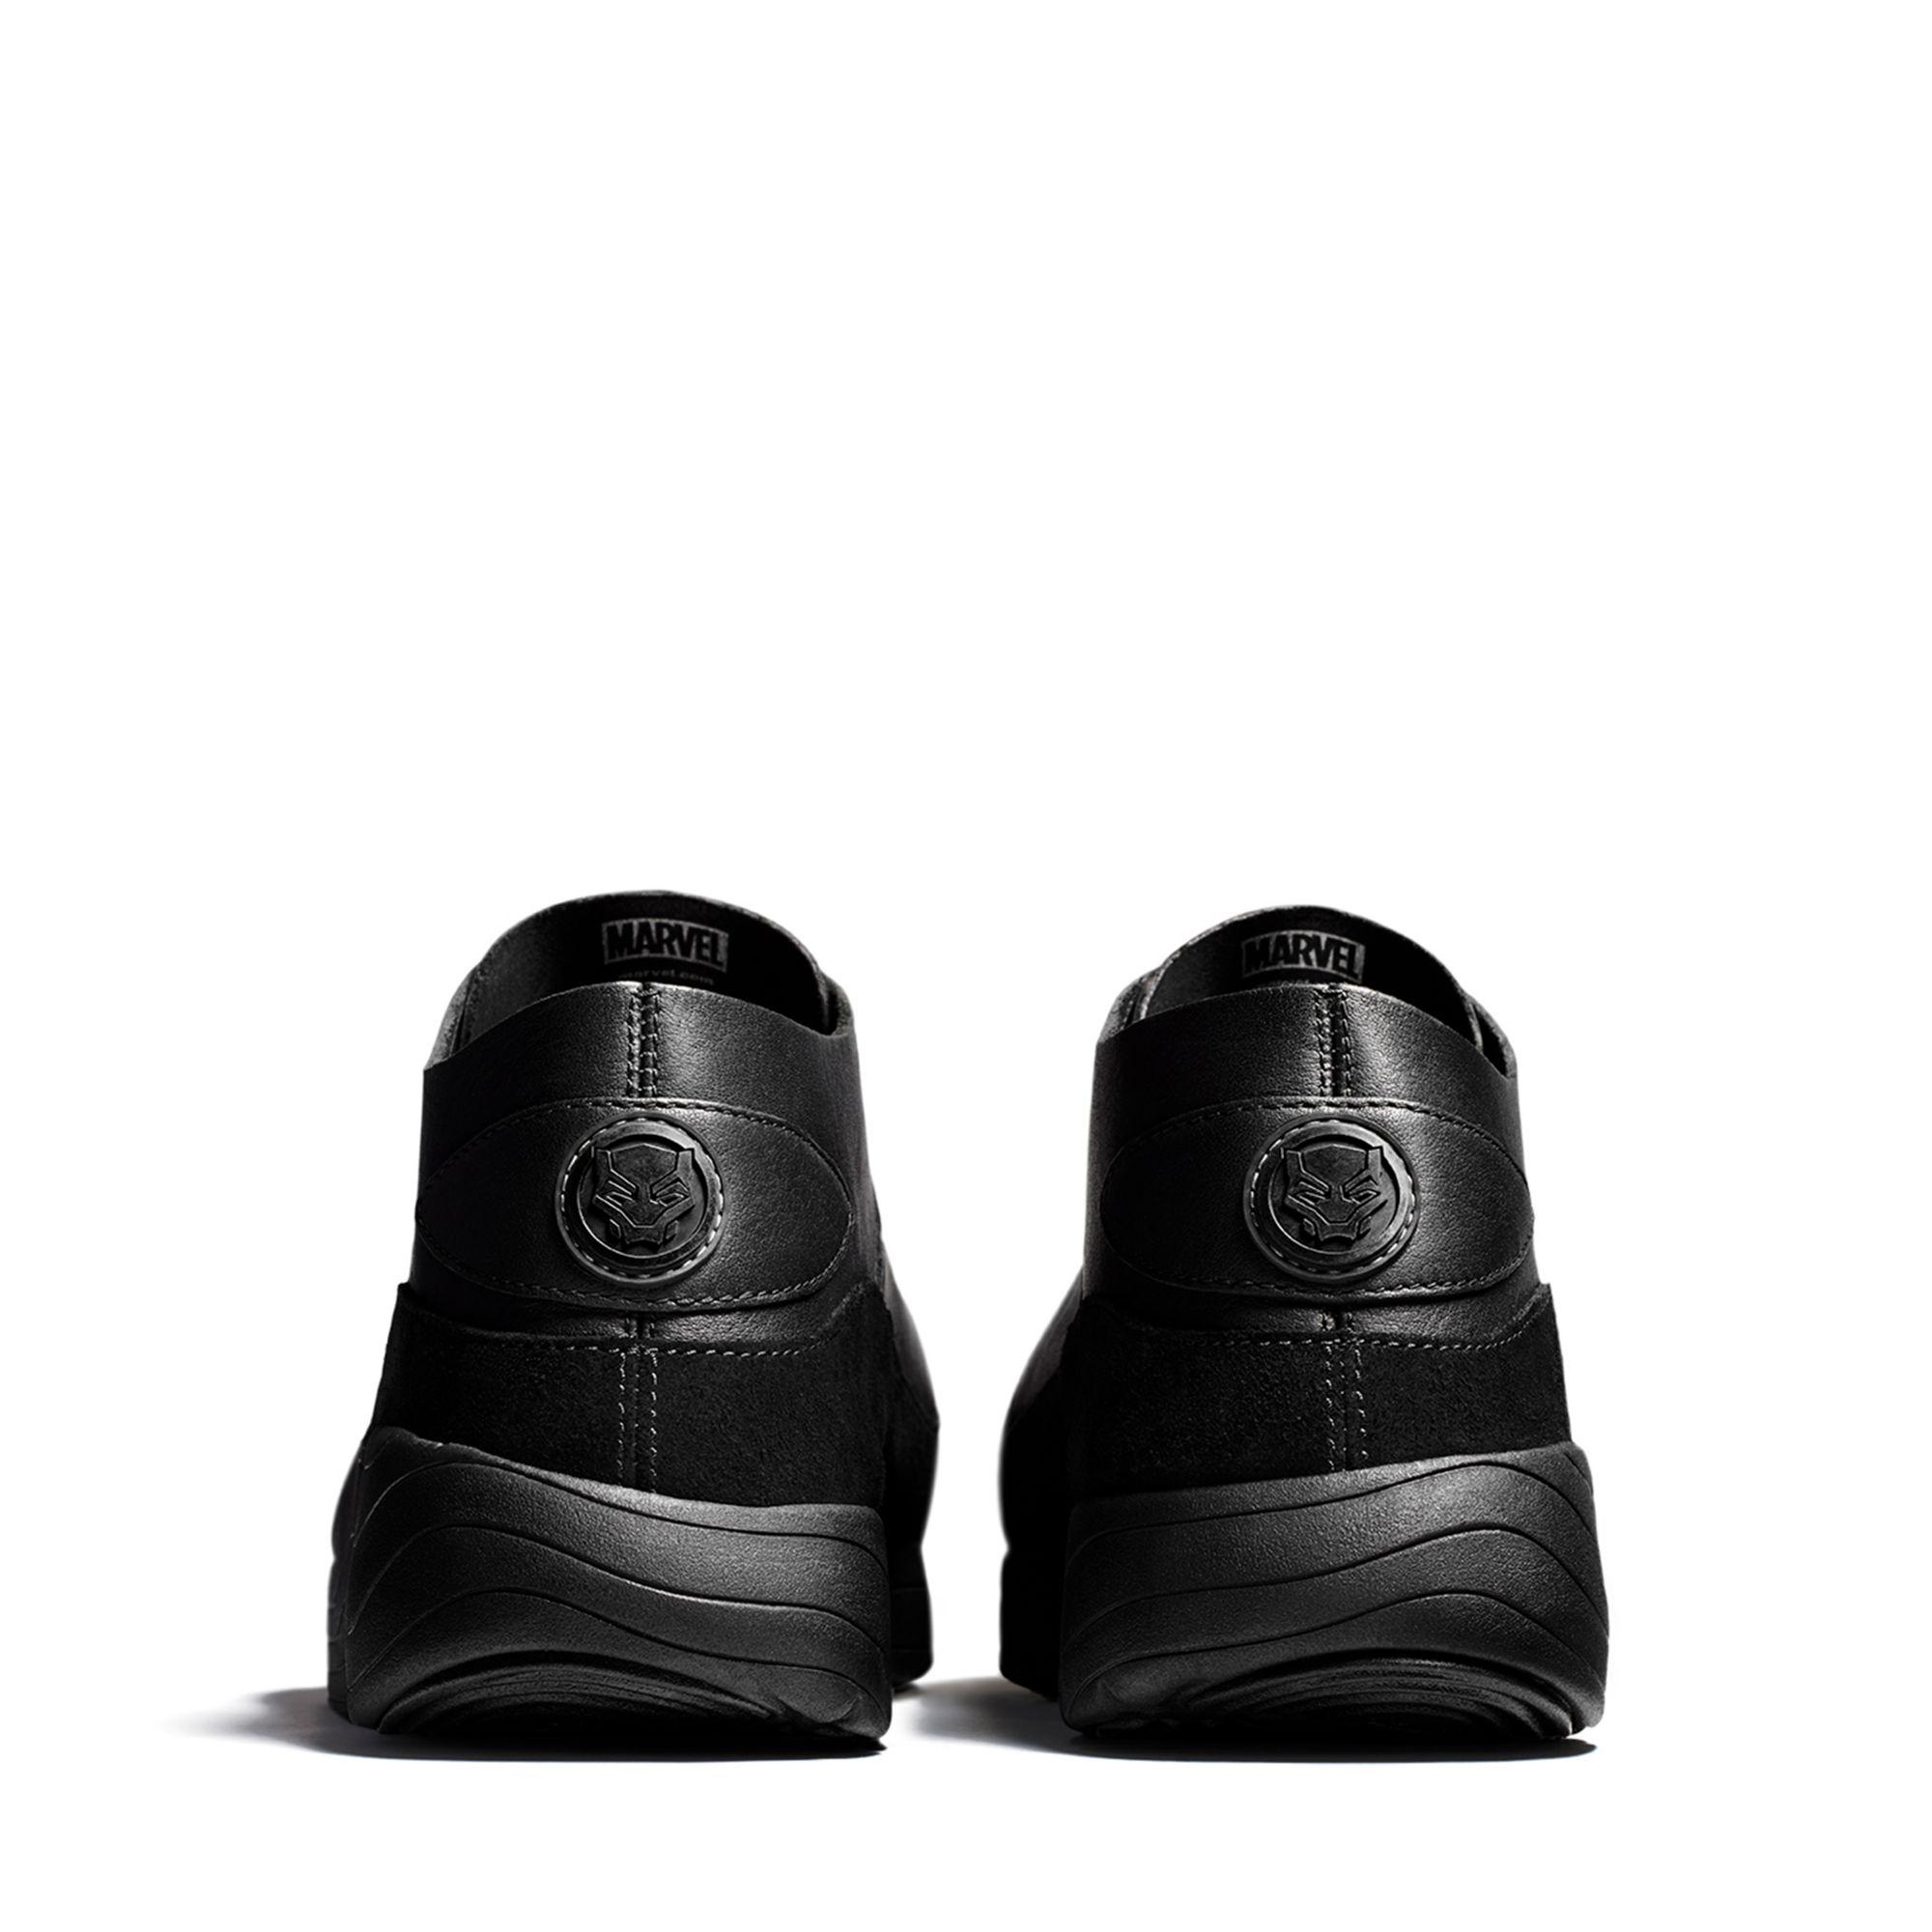 clarks originals black panther shoes